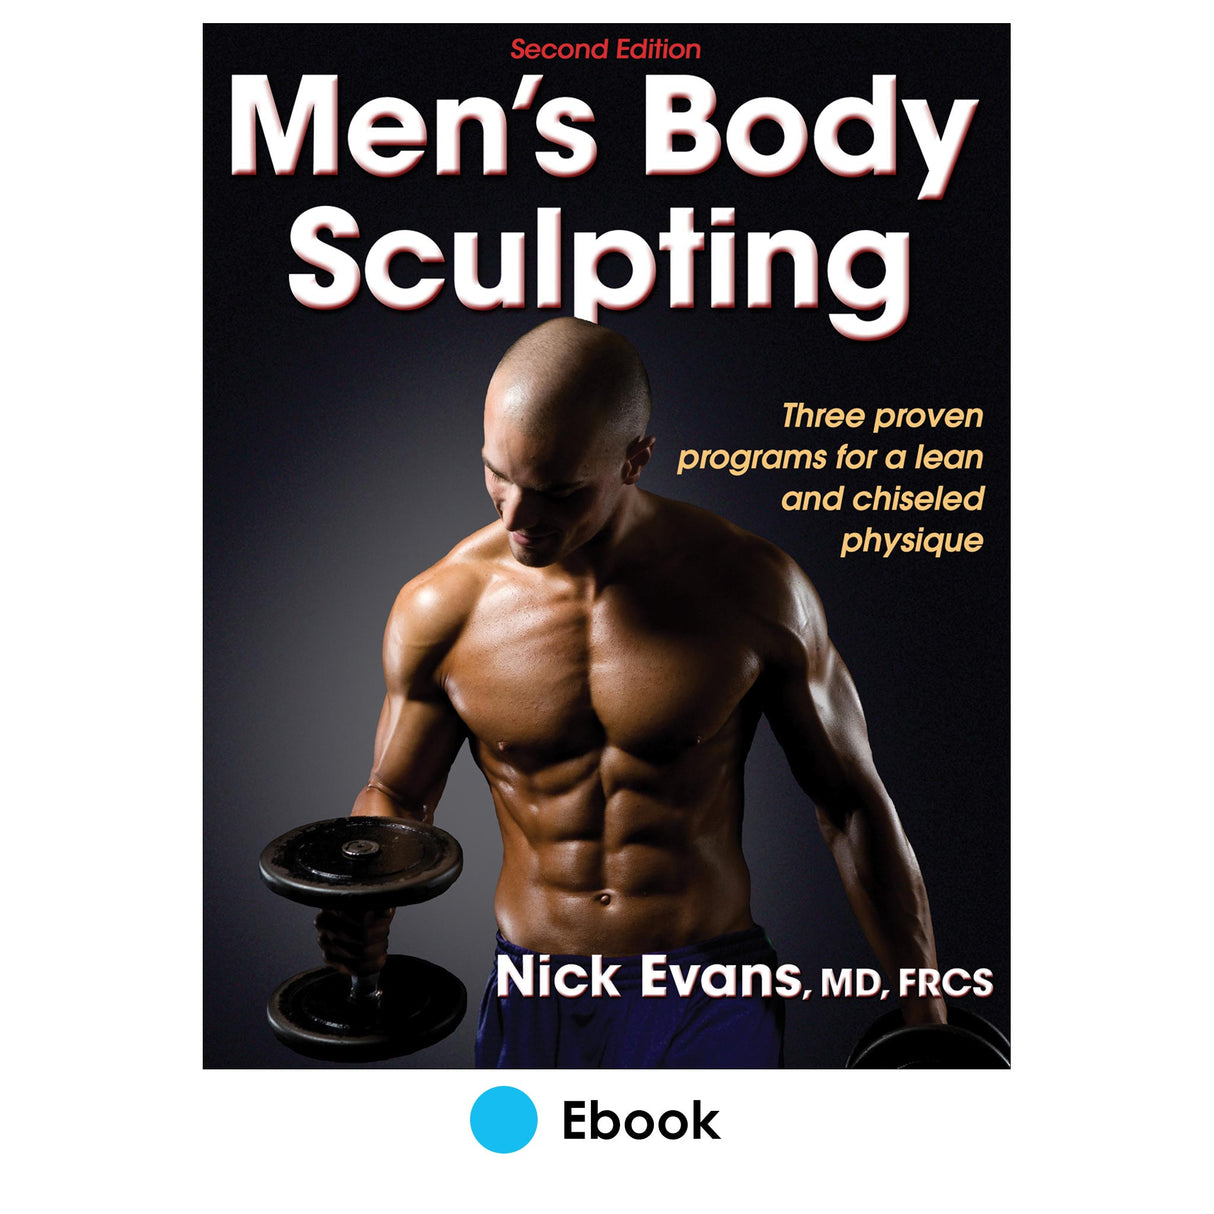 Men's Body Sculpting 2nd Edition PDF